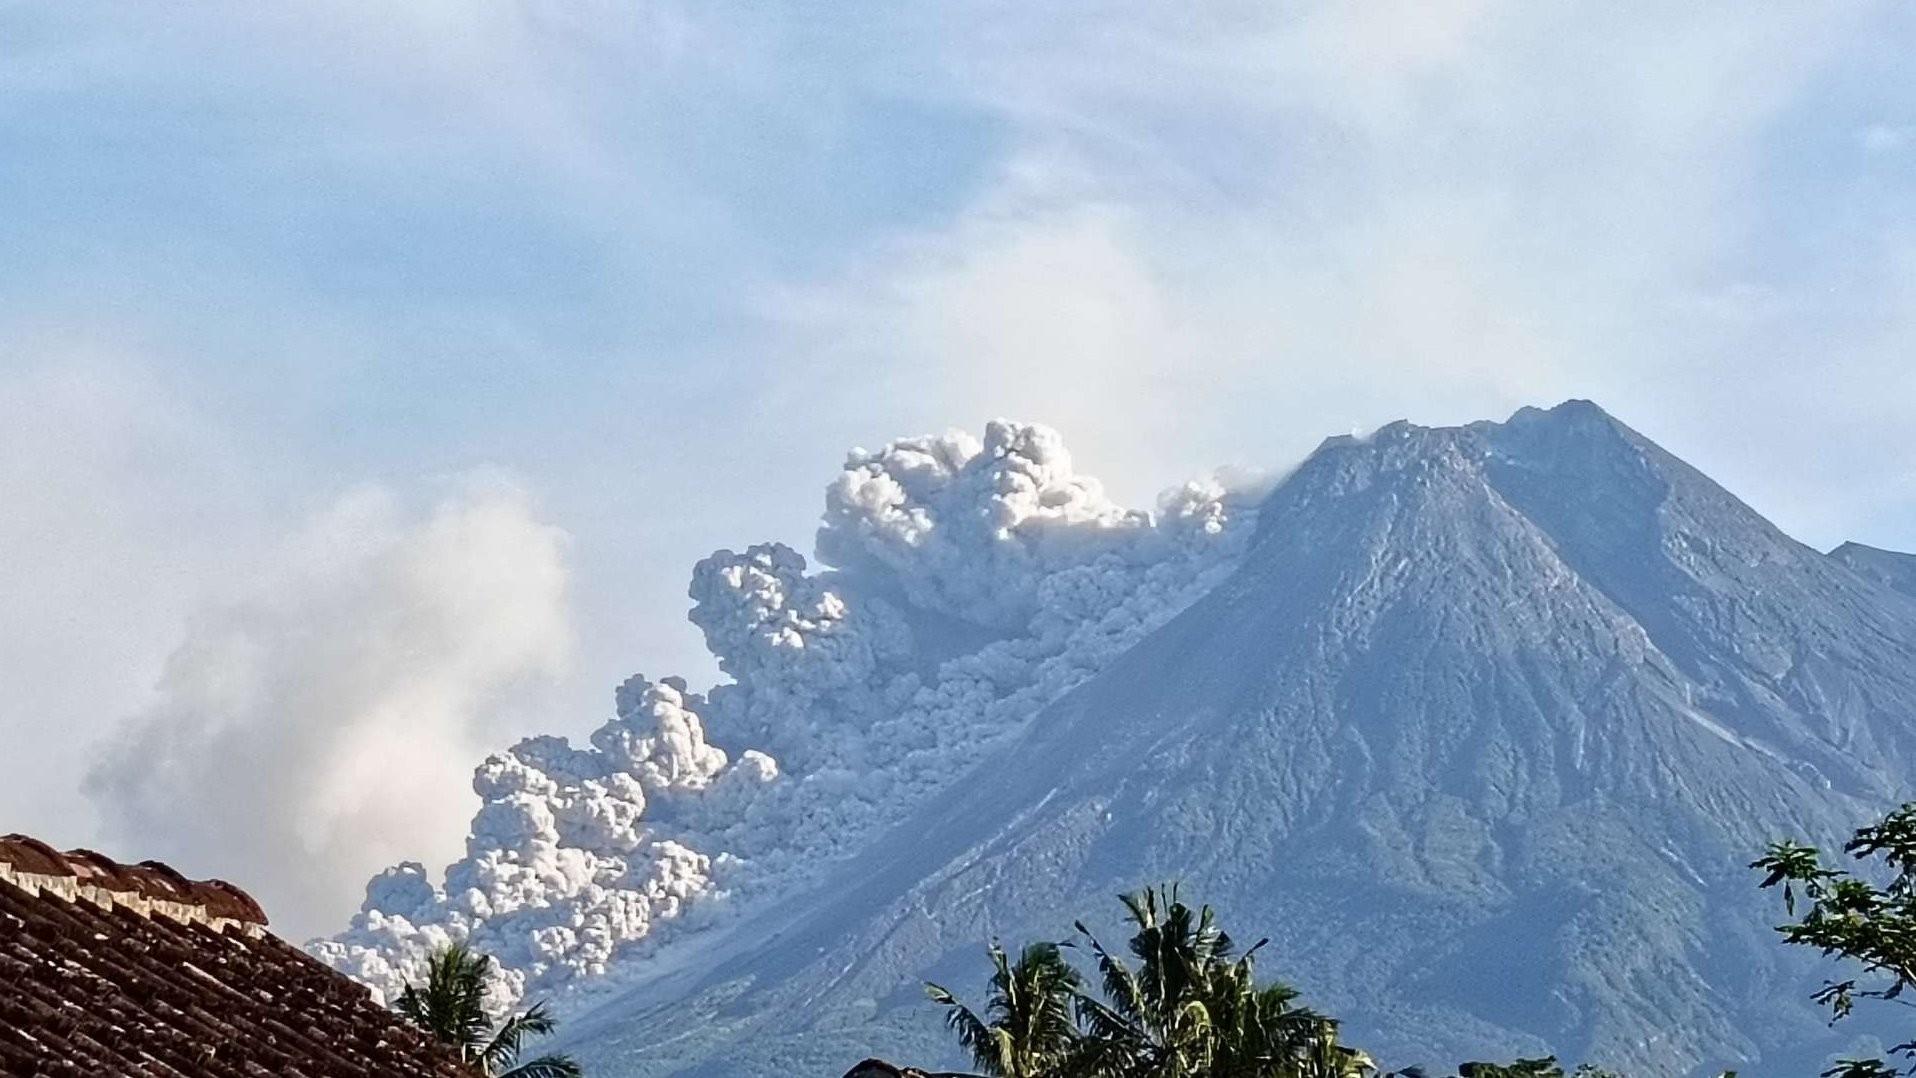 Gunung Merapi erupsi berdampak hujan abu hingga penutupan lokasi wisata. (Foto: Twitter)